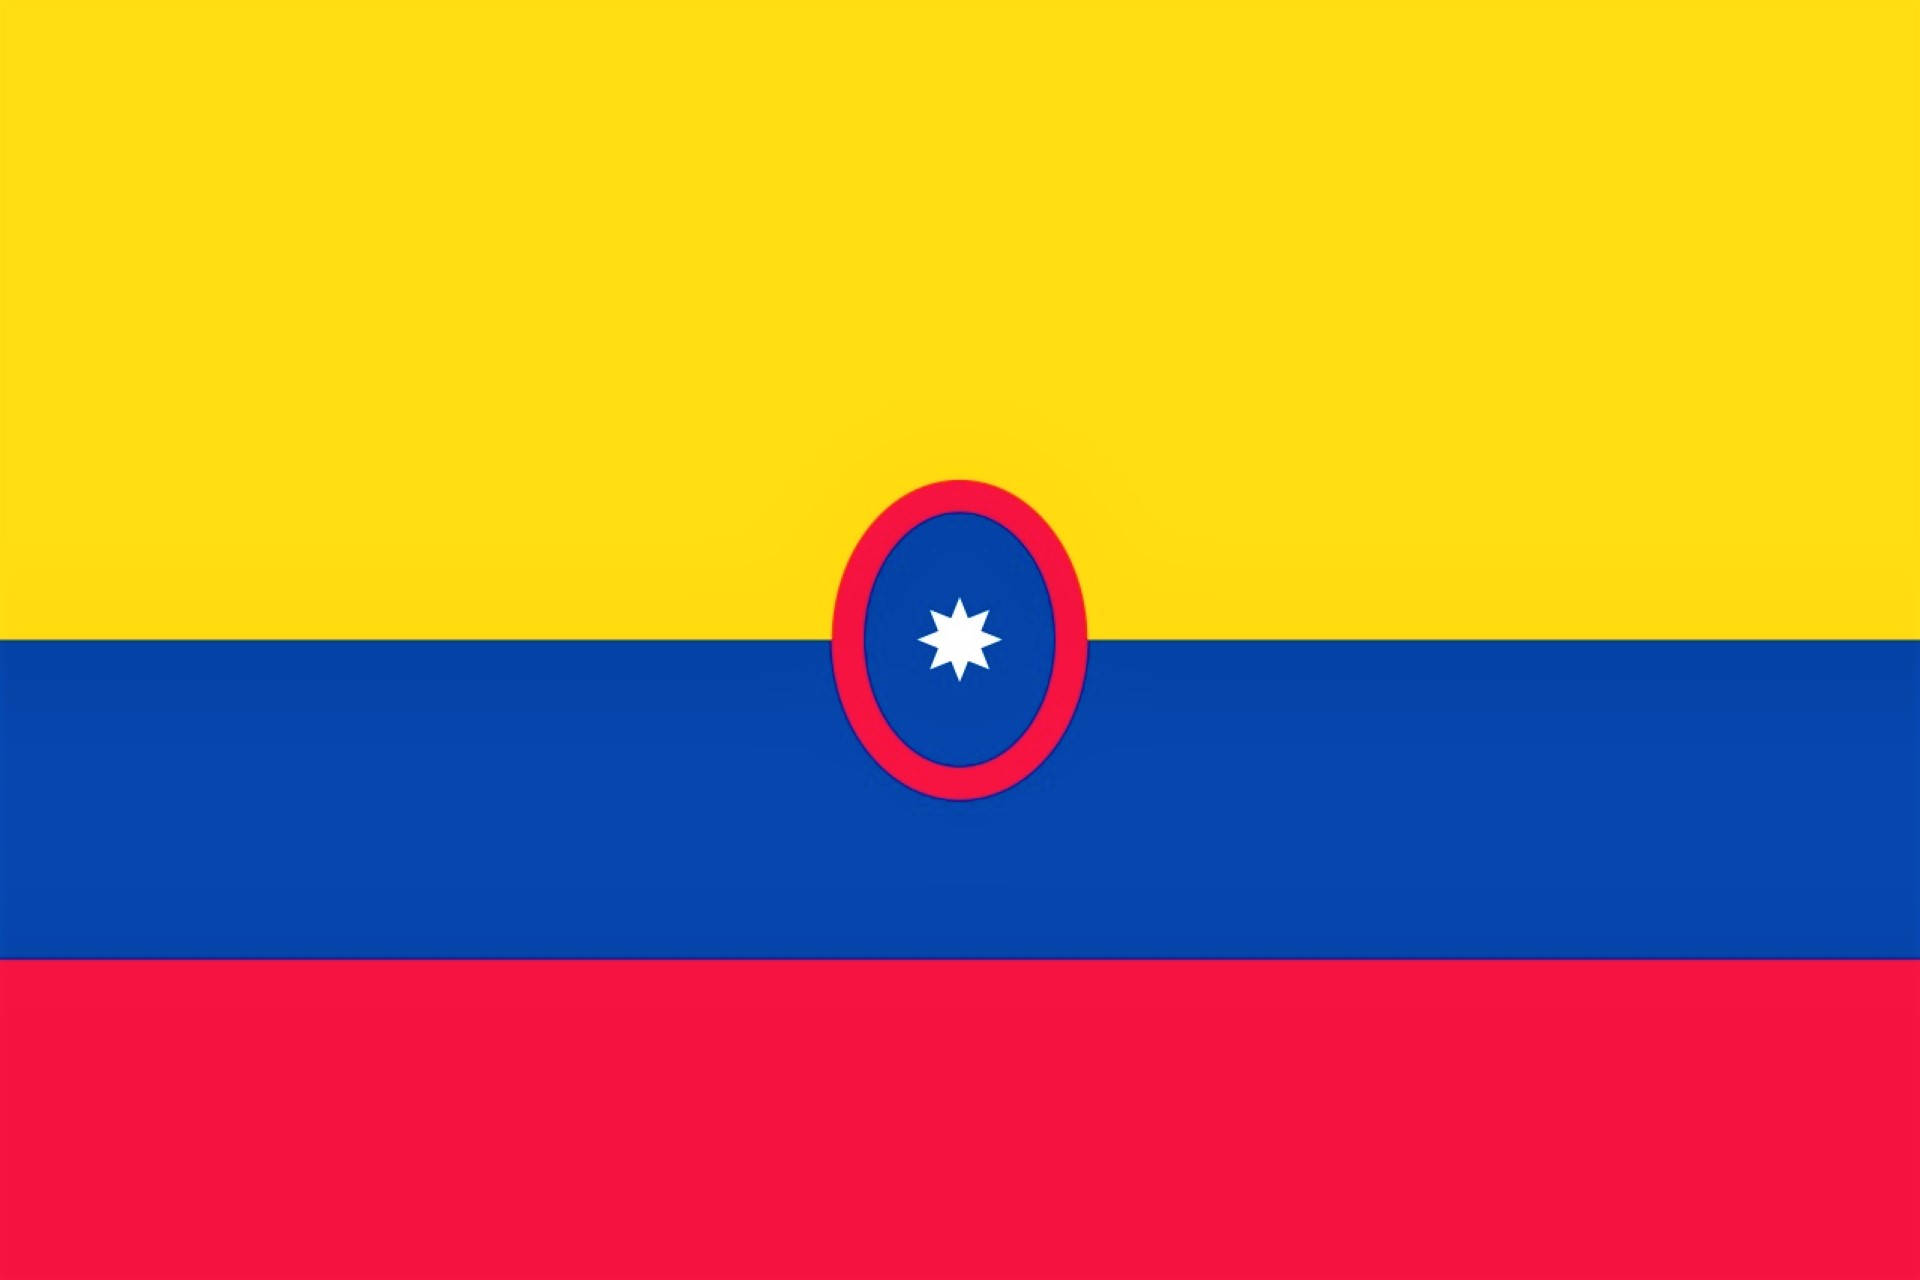 Zivilesstandesbekenntnis Der Kolumbianischen Flagge Wallpaper